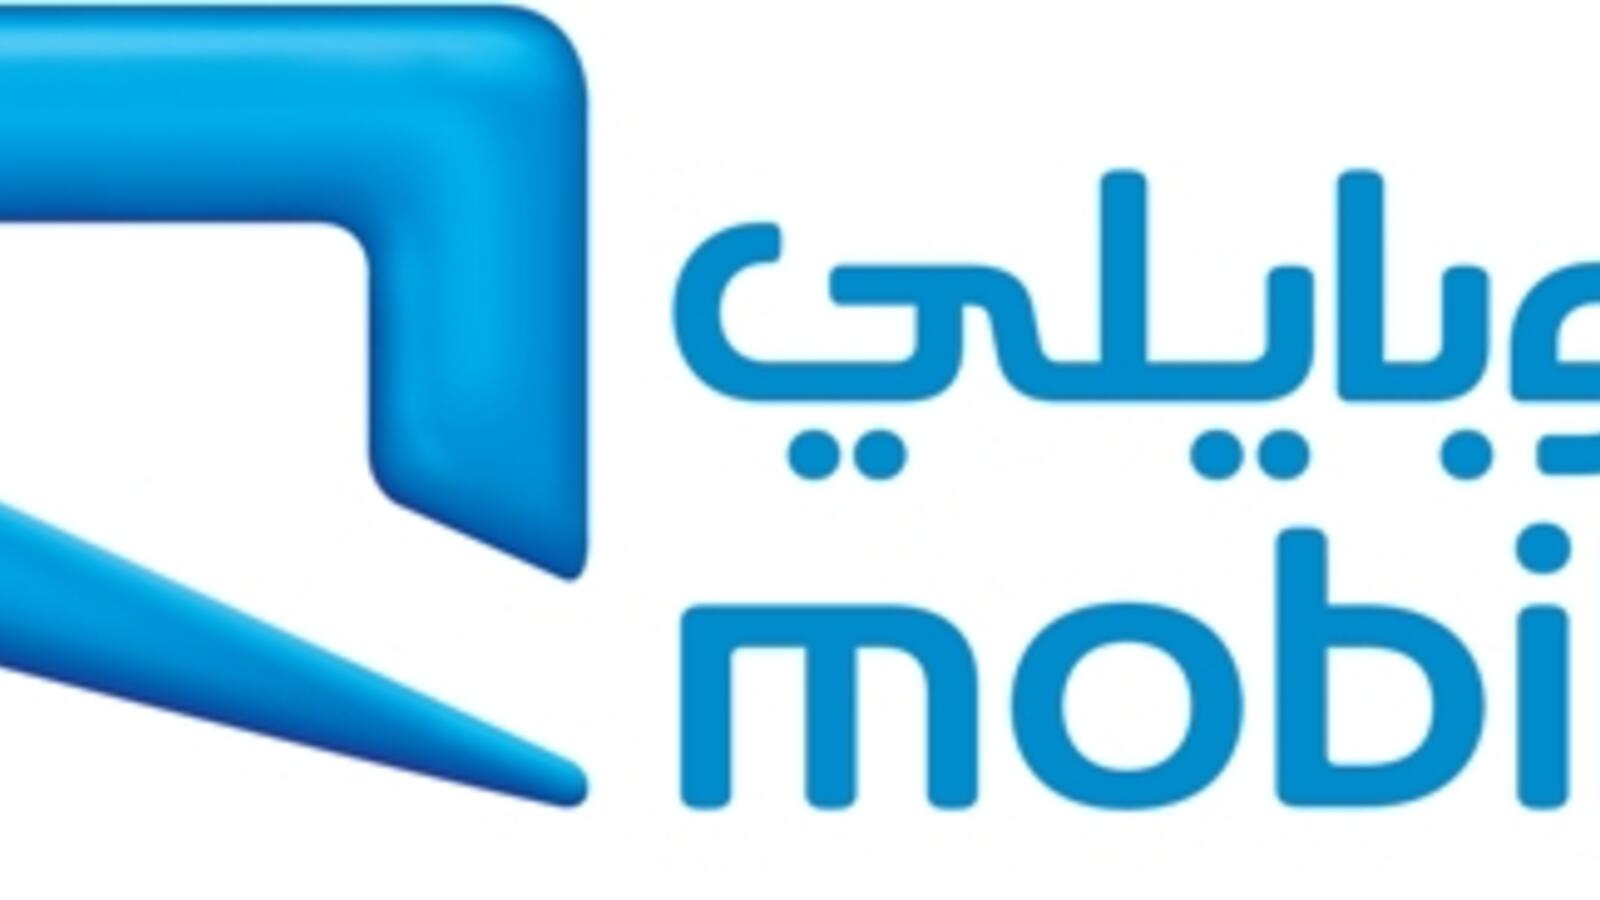 Mobily Logo - Saudi Mobily fires CEO over 'shocking' accounting errors | Al Bawaba